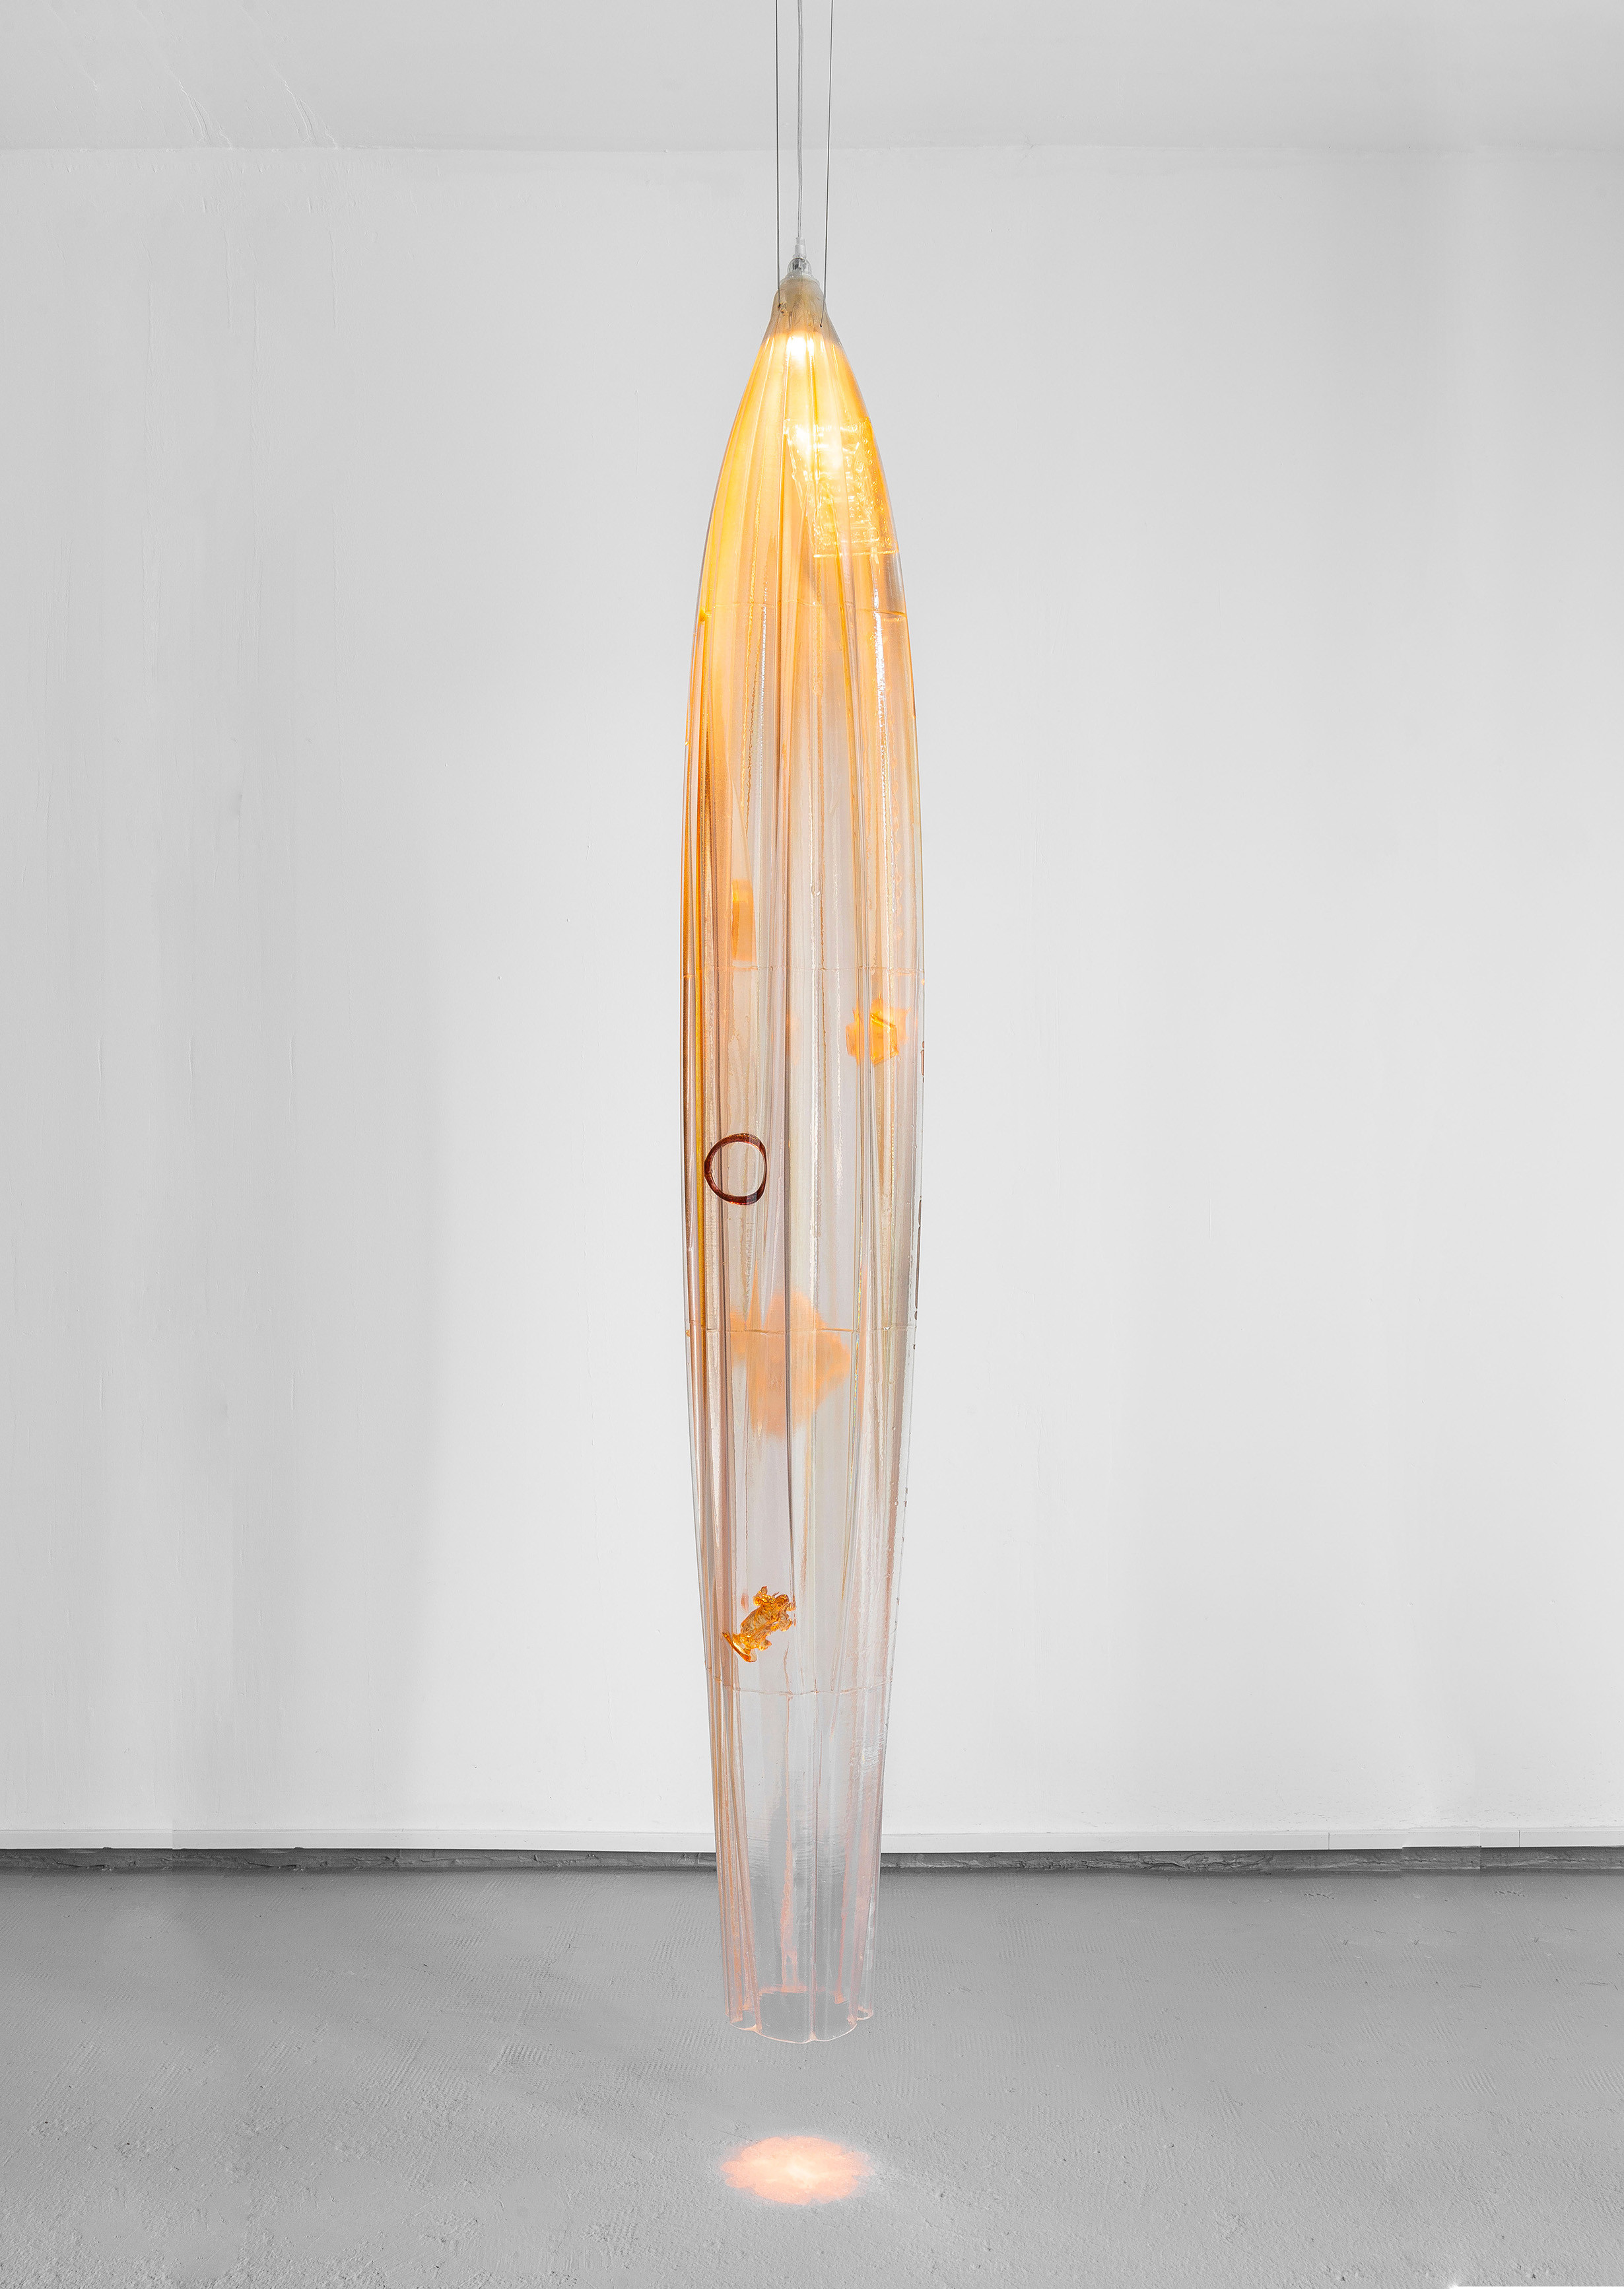 Kim Farkas, *22-08*, 2022, Custom composites, LED bulb and fixture, stainless steel, ø27 × 184 cm